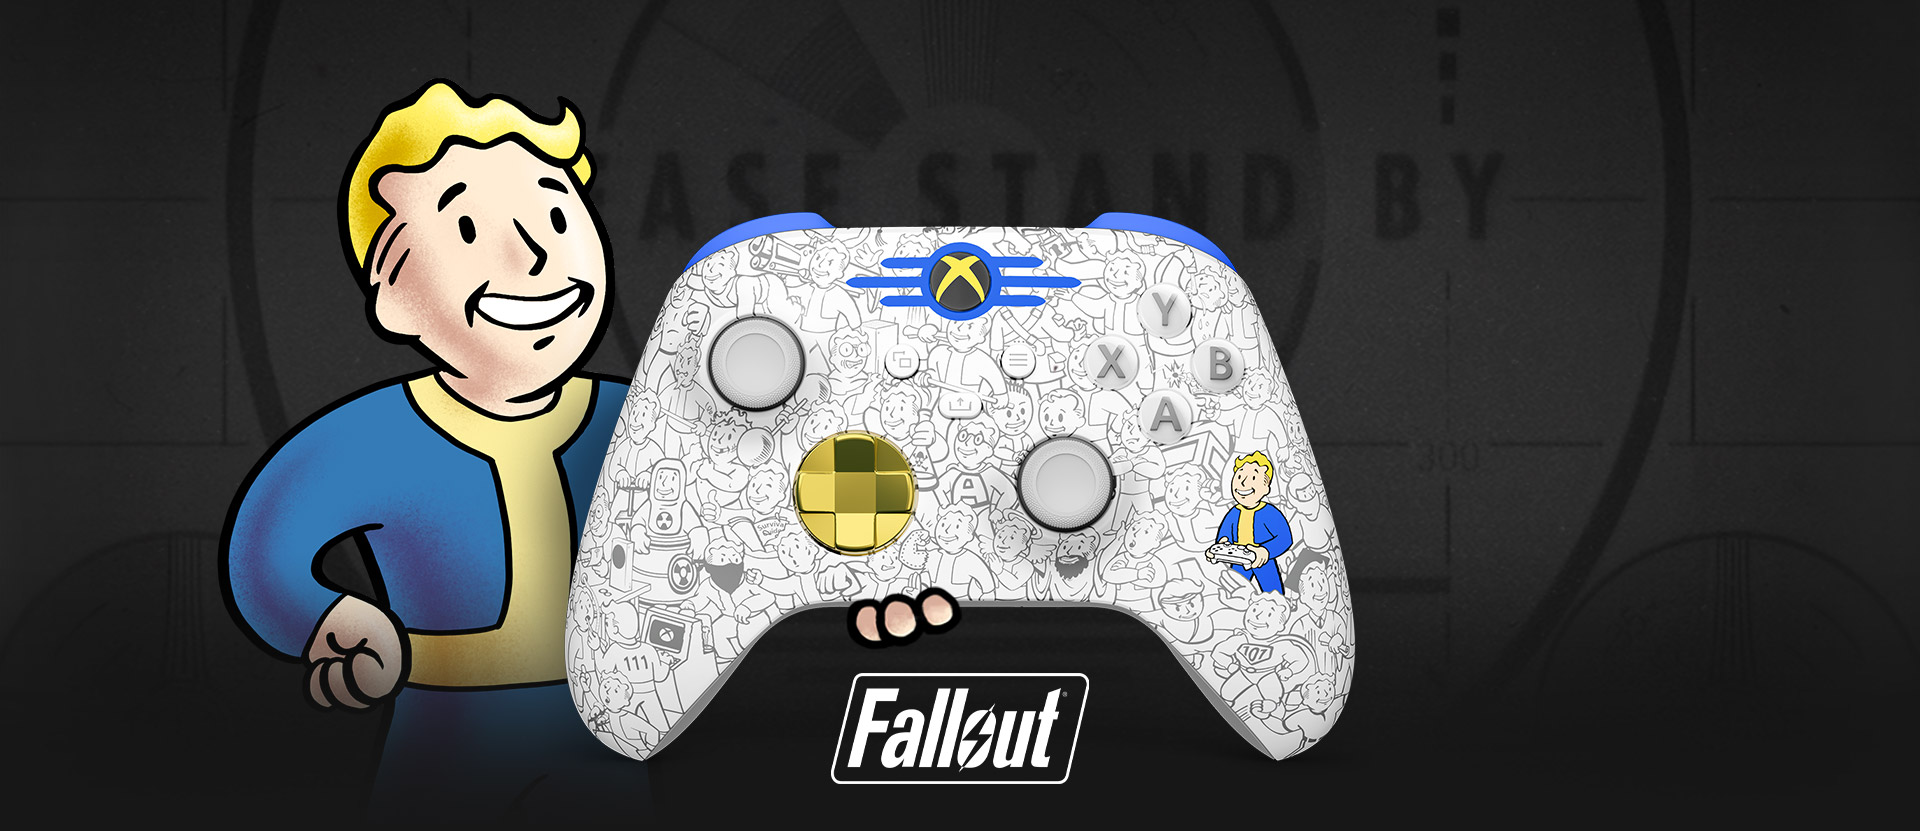 Kontroler Xbox inspirowany serią Fallout